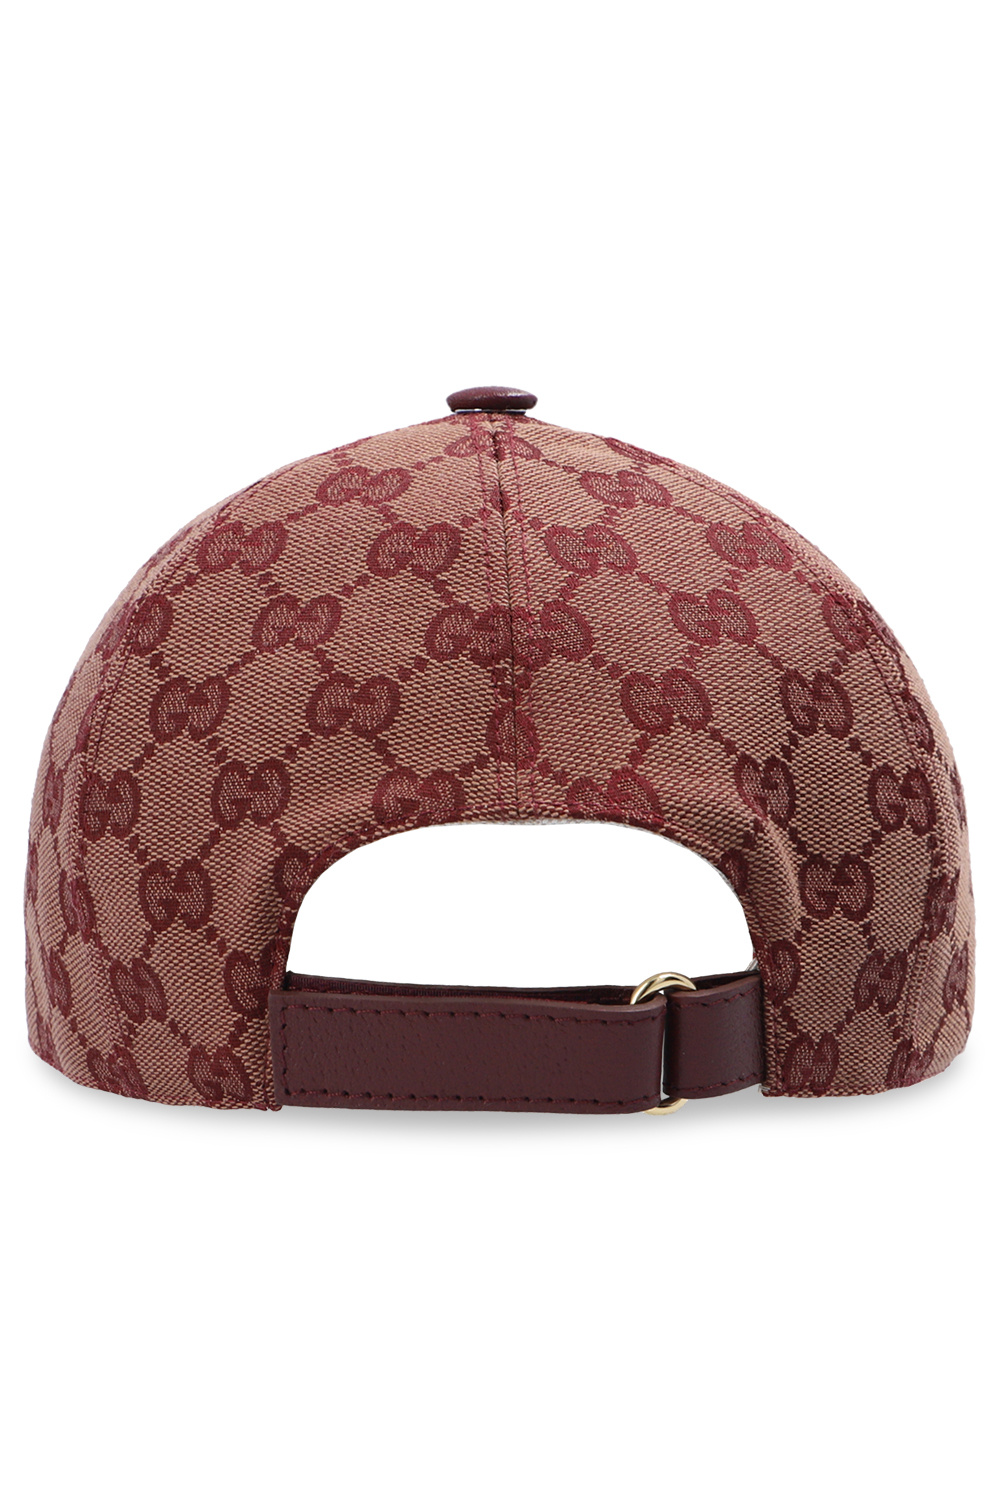 Gucci Baseball cap with logo, Women's Accessories